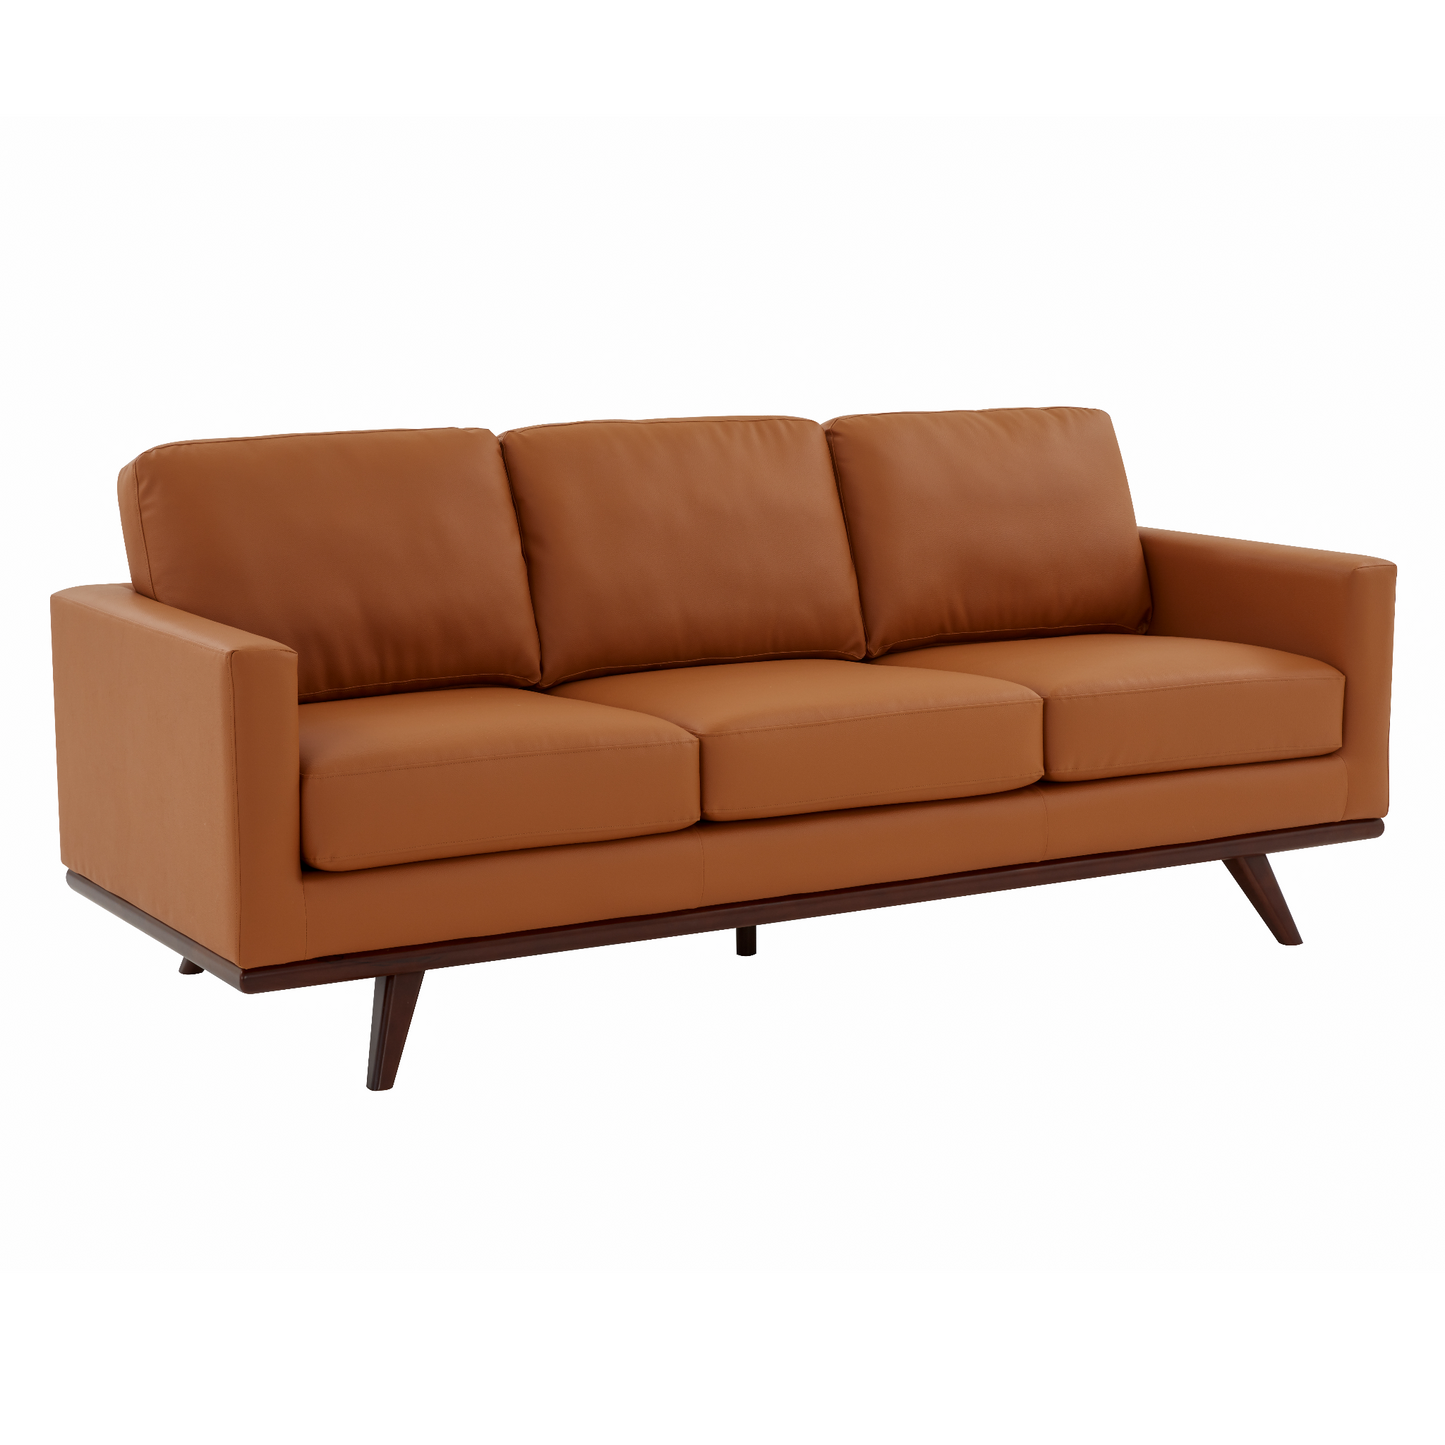 Edvin Leather Sofa - Birch Wood Base